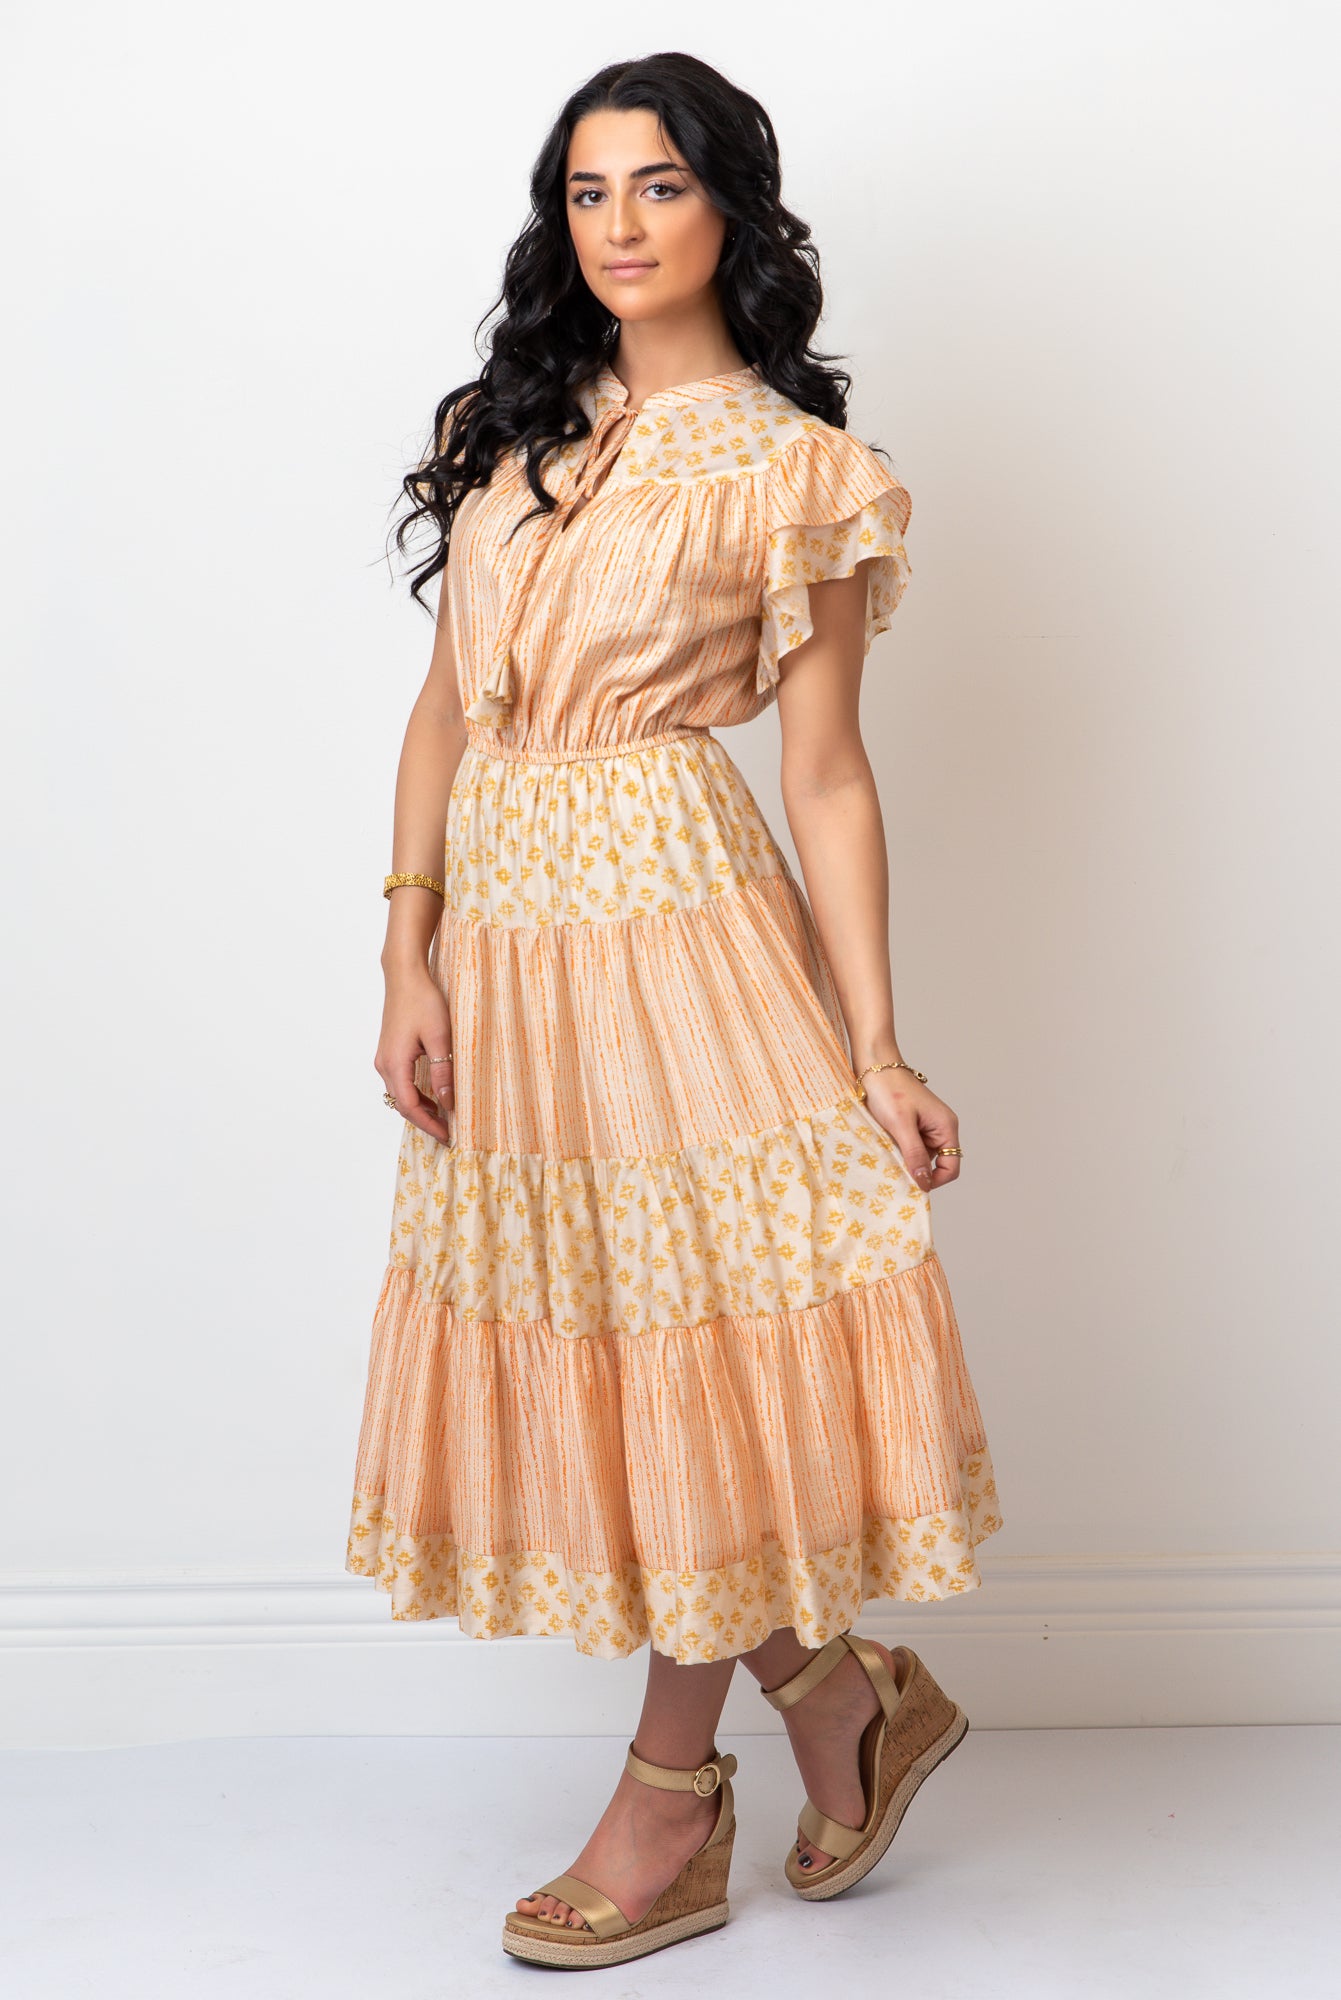 Current Air: The Eloise Dress